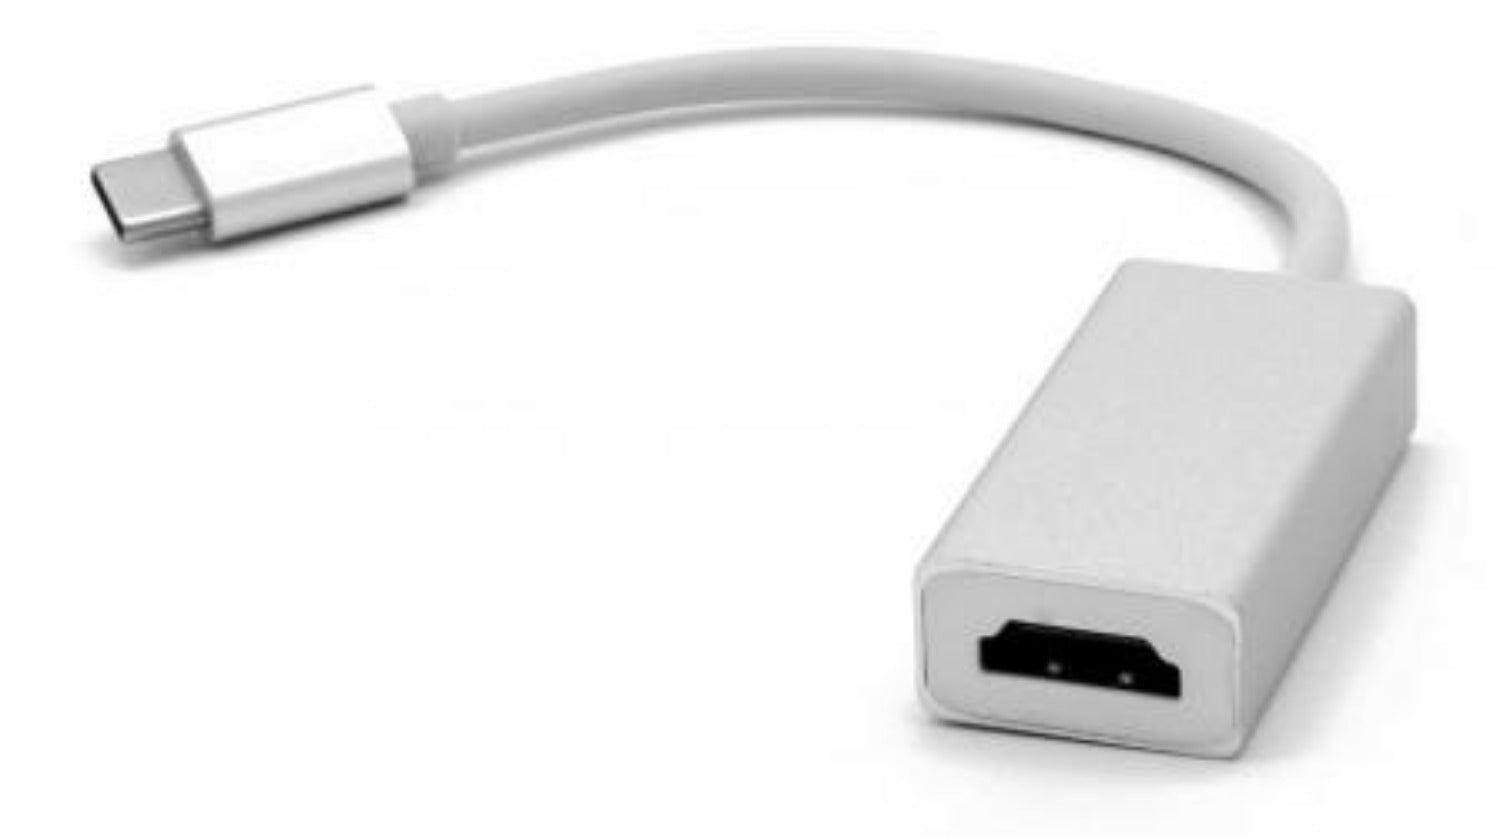 Dynamode C-TC-HDMI USB Type-C to HDMI Adapter